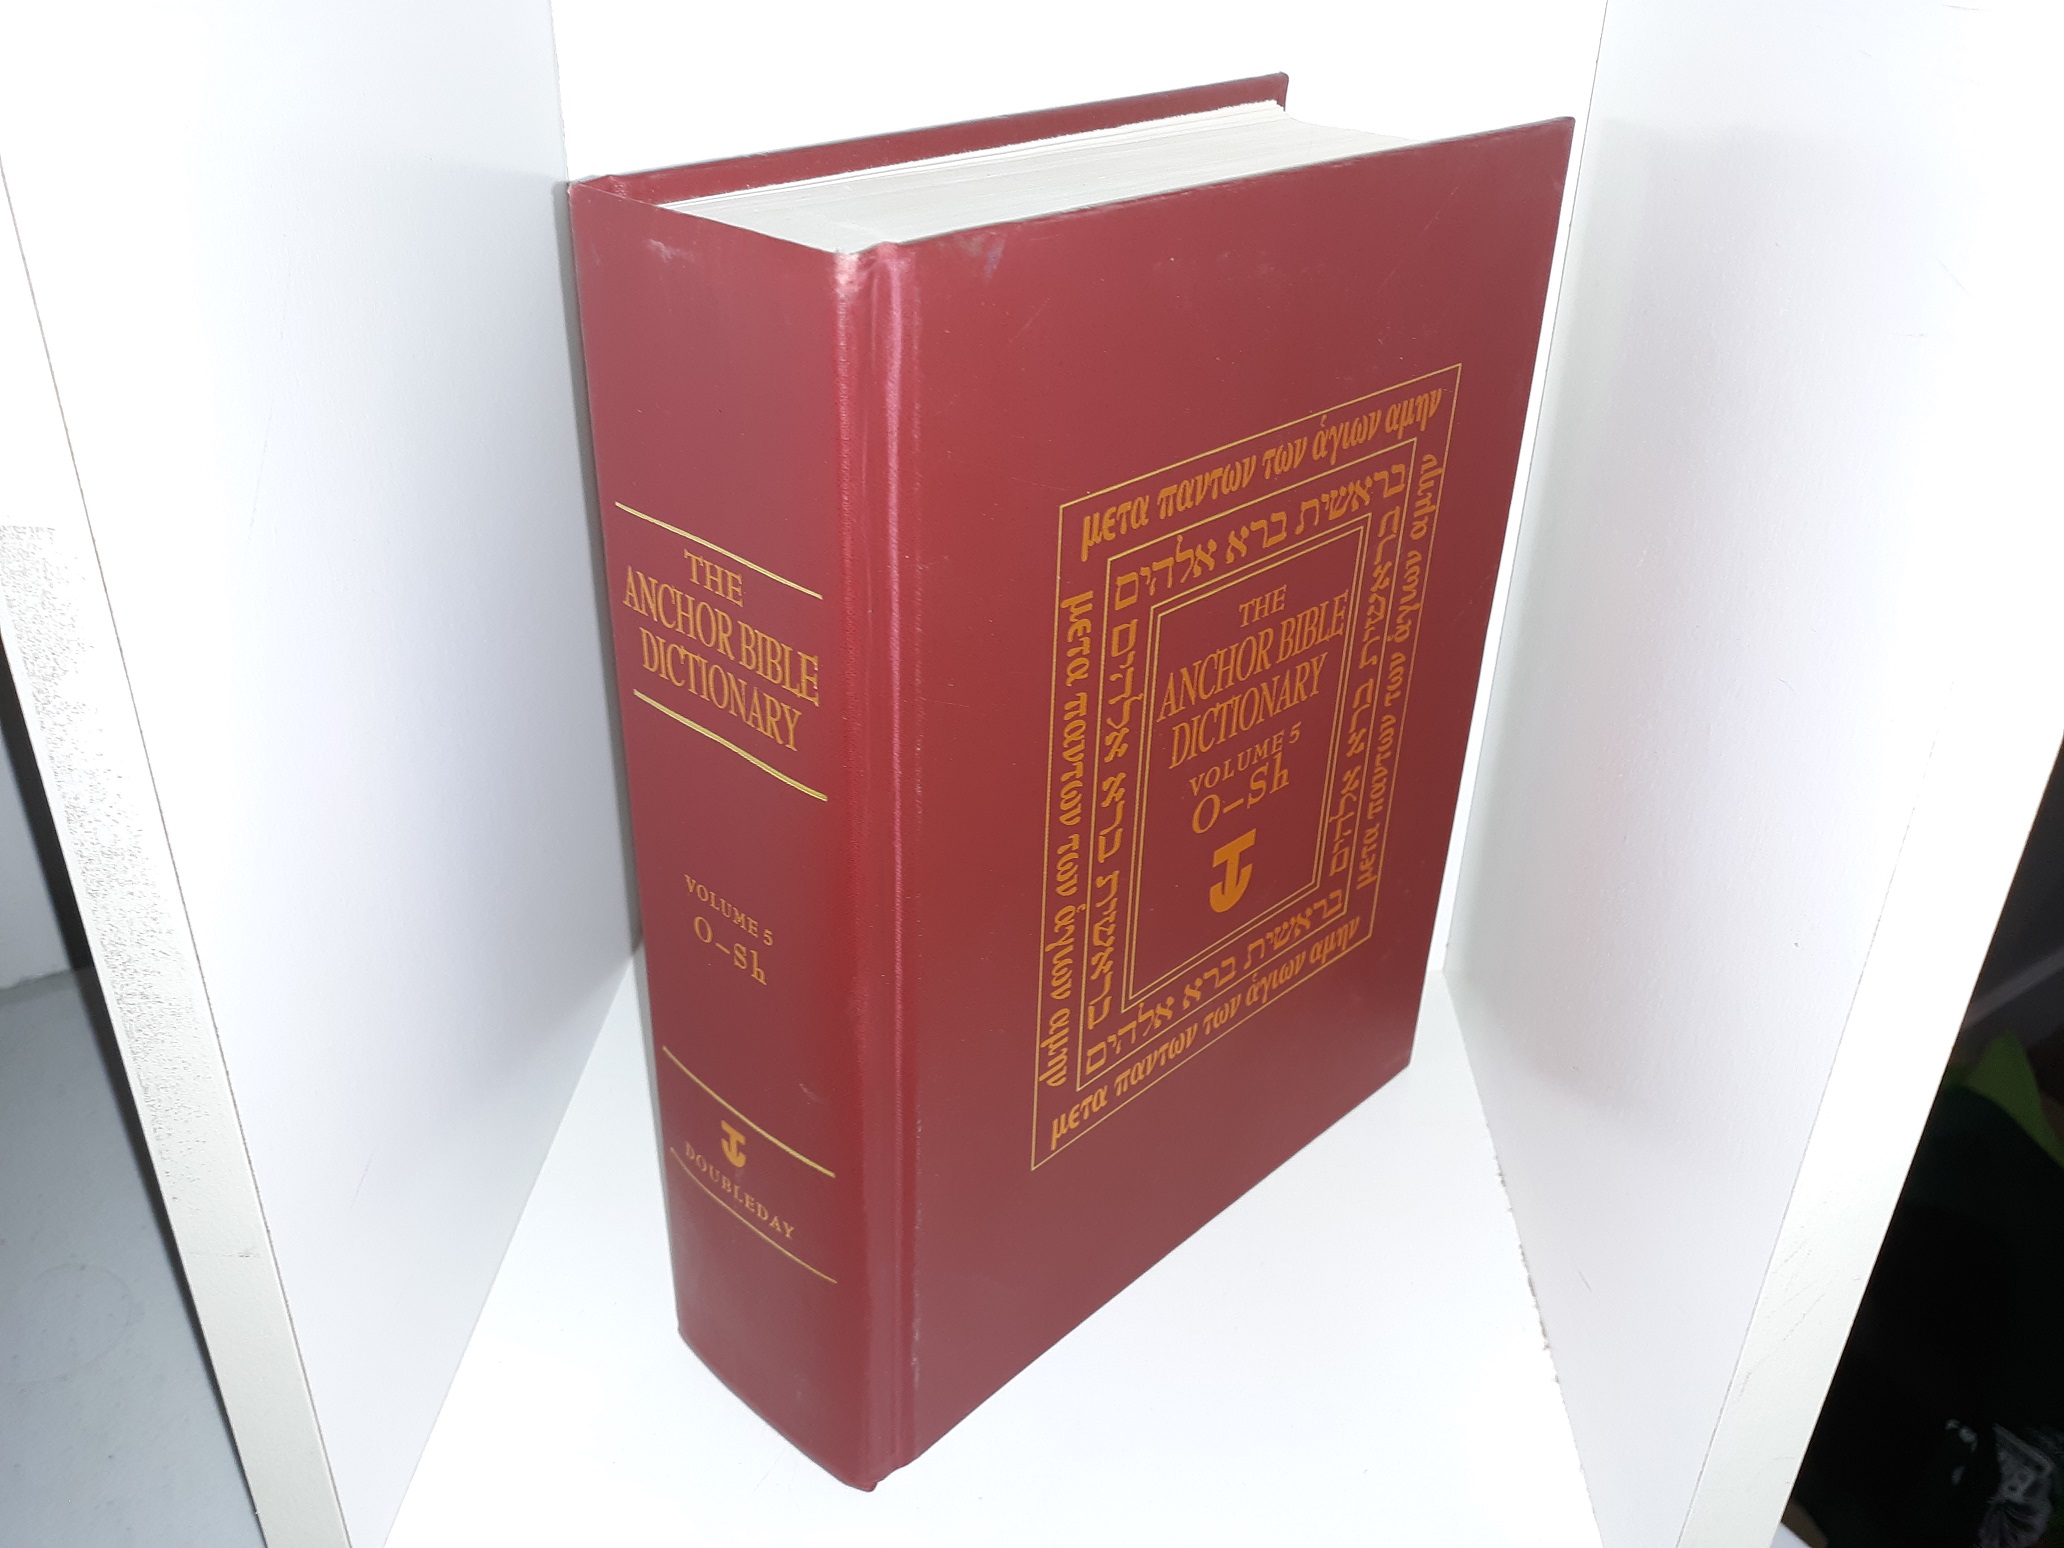 The Anchor Bible Dictionary Vol 5 O Sh 1992 ~ Edited By David Noel Freedman Eborn Books 5727